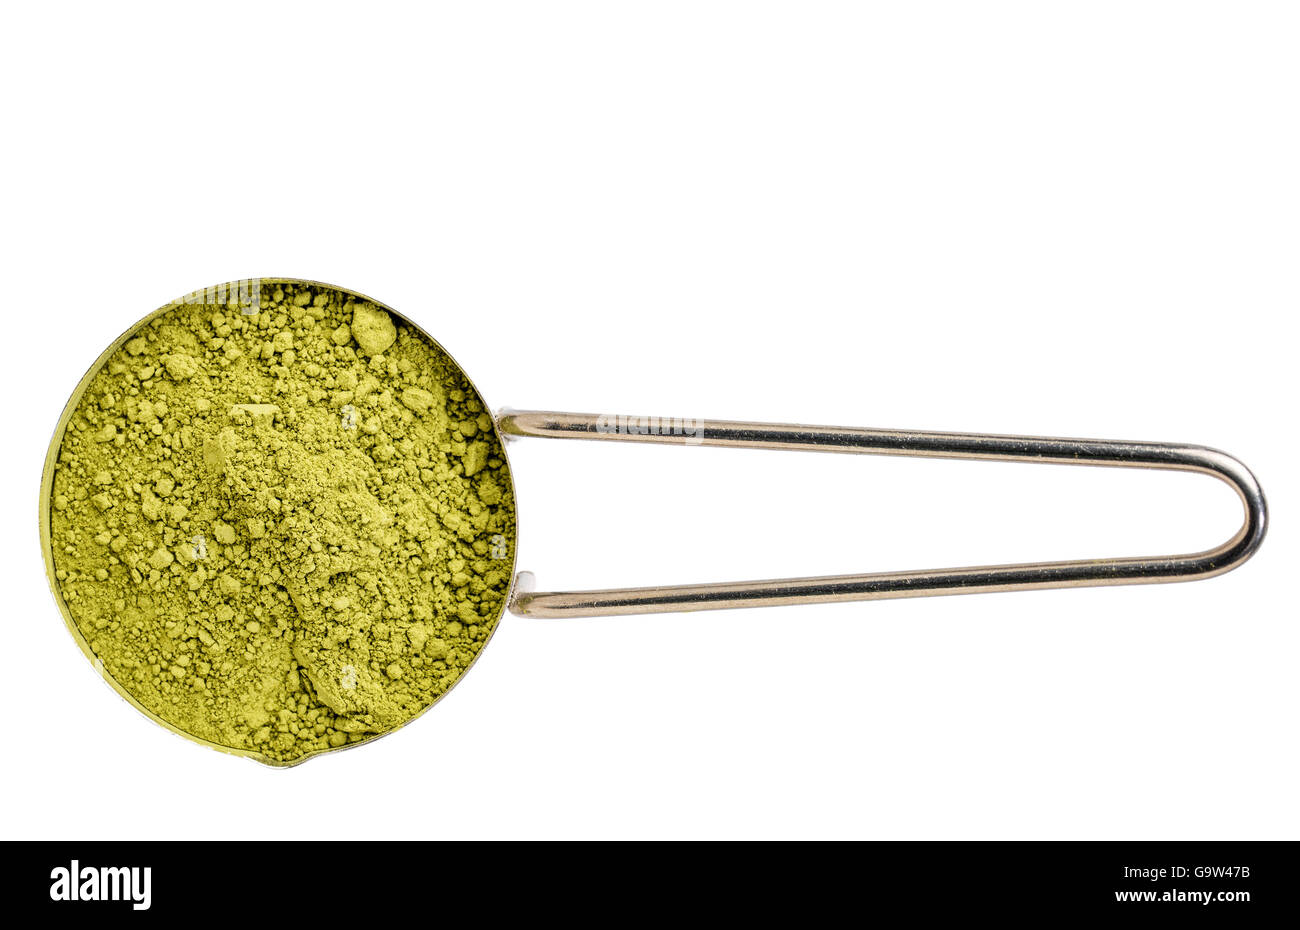 measuring scoop of organic matcha green tea powder isolated on white Stock Photo